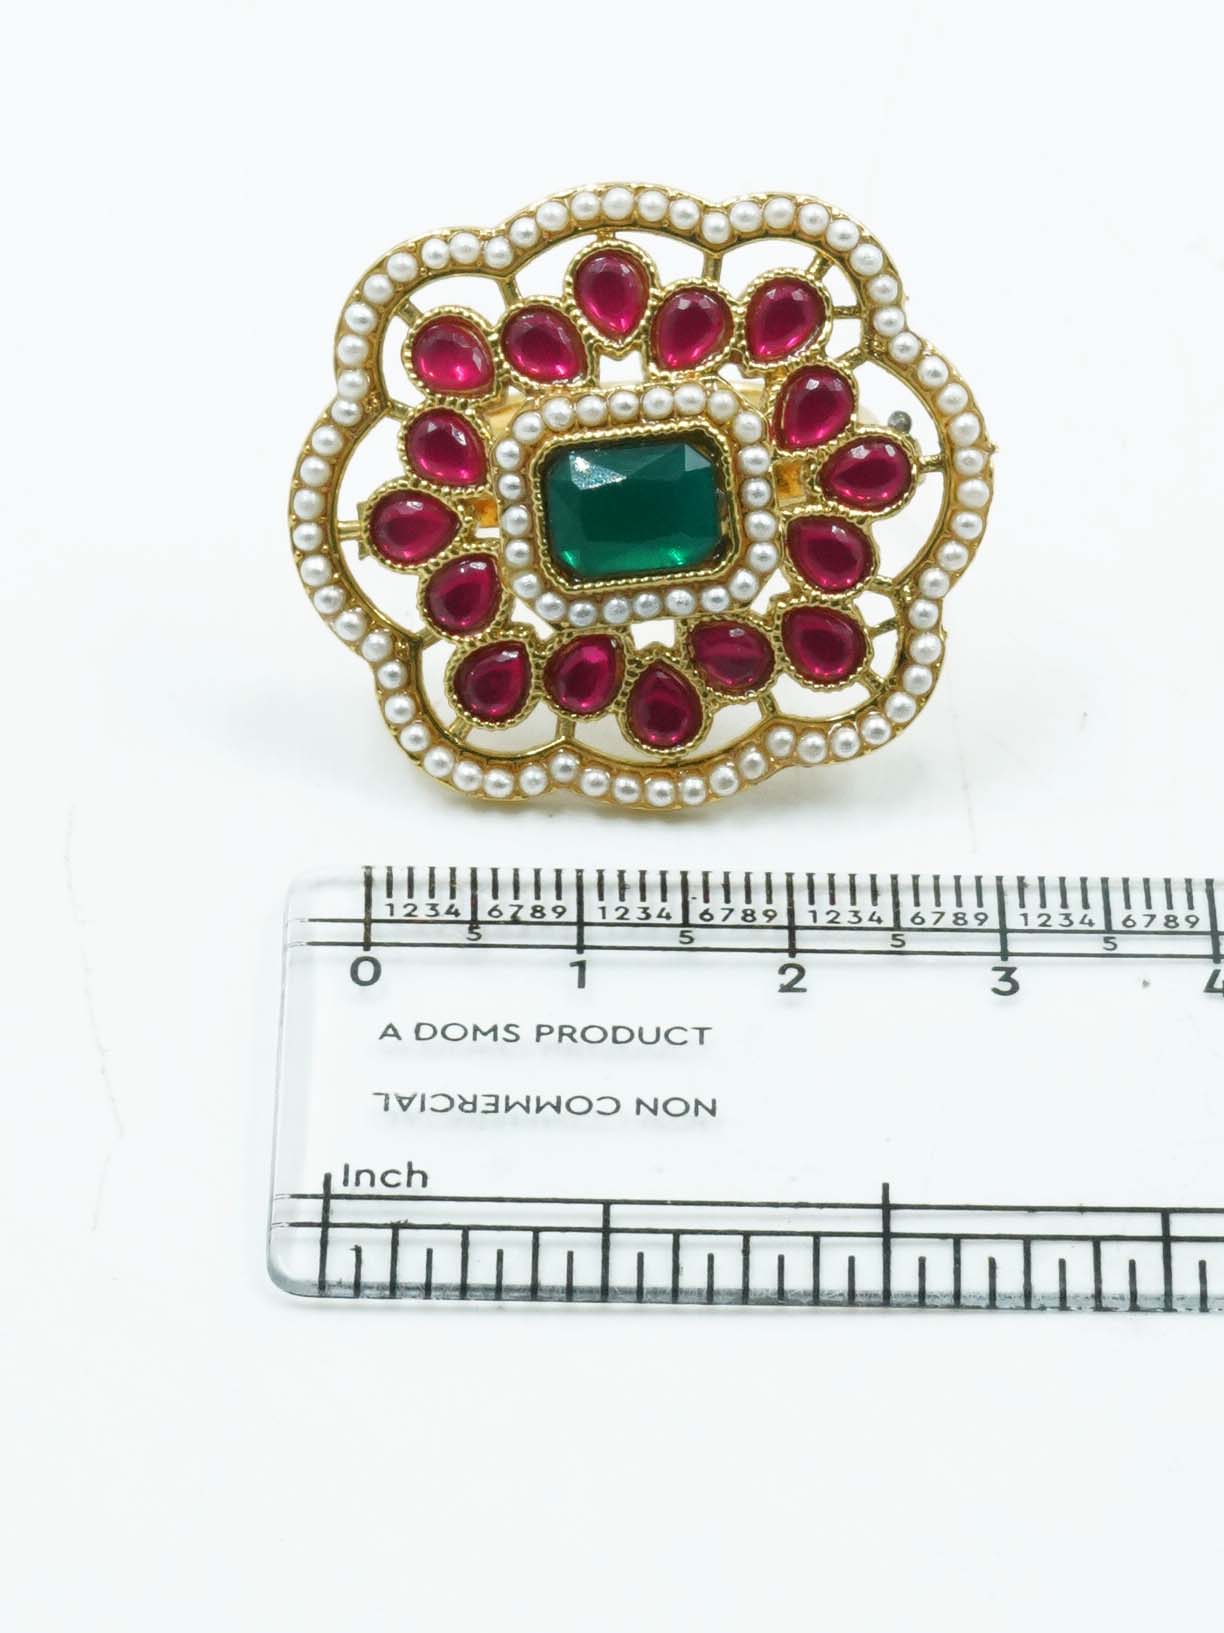 Antique Gold Plated Adjustable Size Designer Finger ring with Stones 10916N